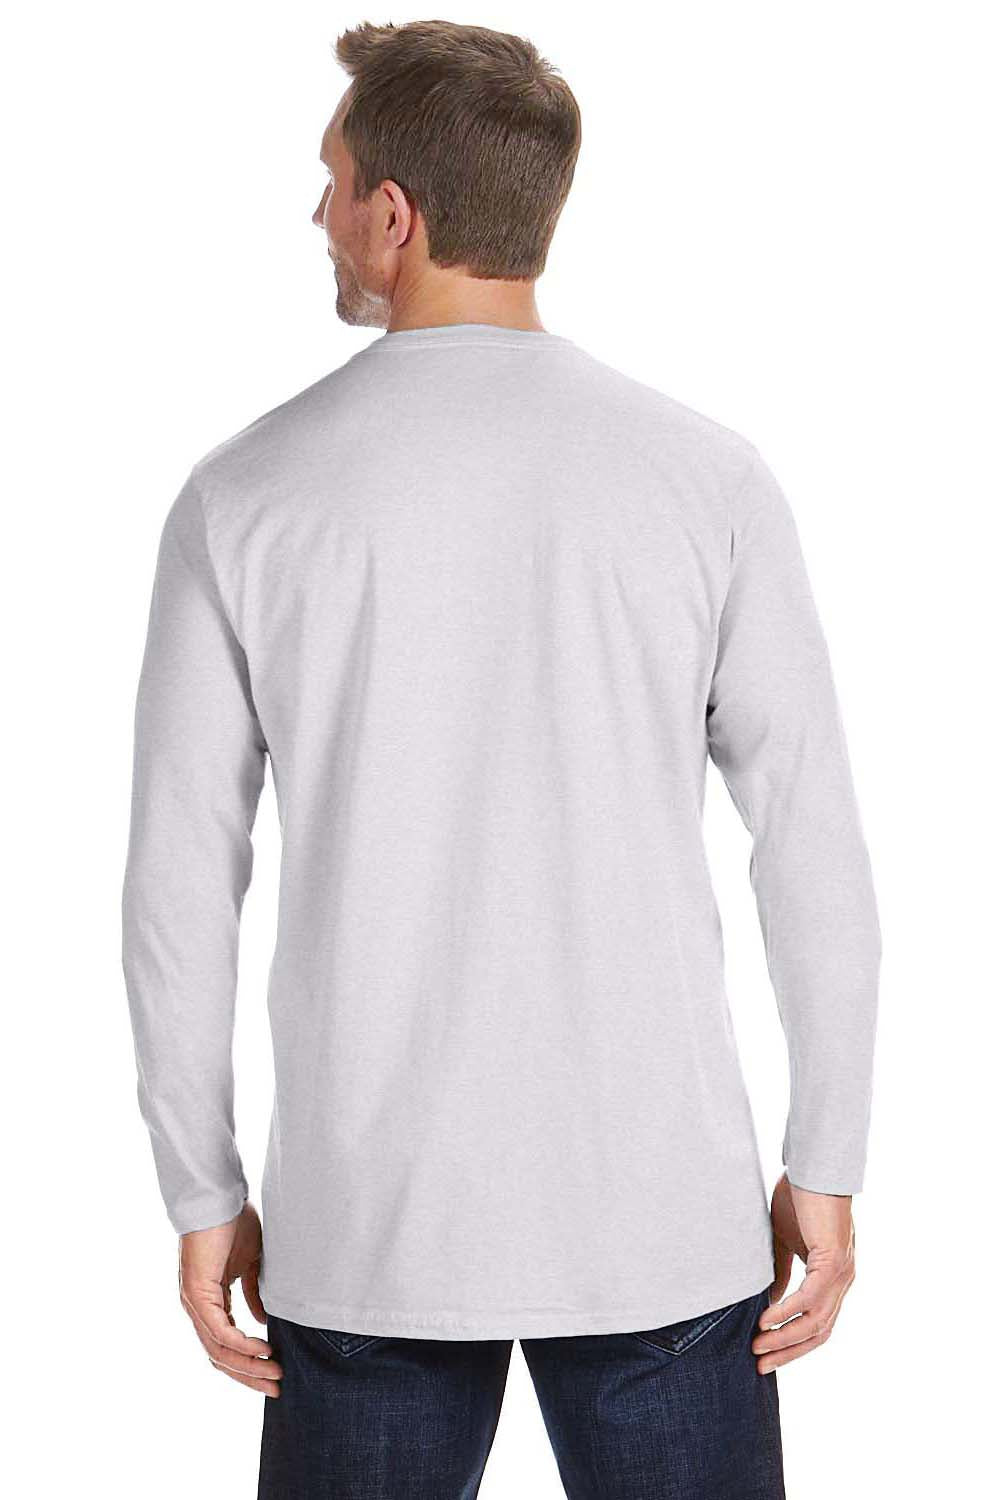 Hanes 498L Mens Nano-T Long Sleeve Crewneck T-Shirt Ash Grey Back